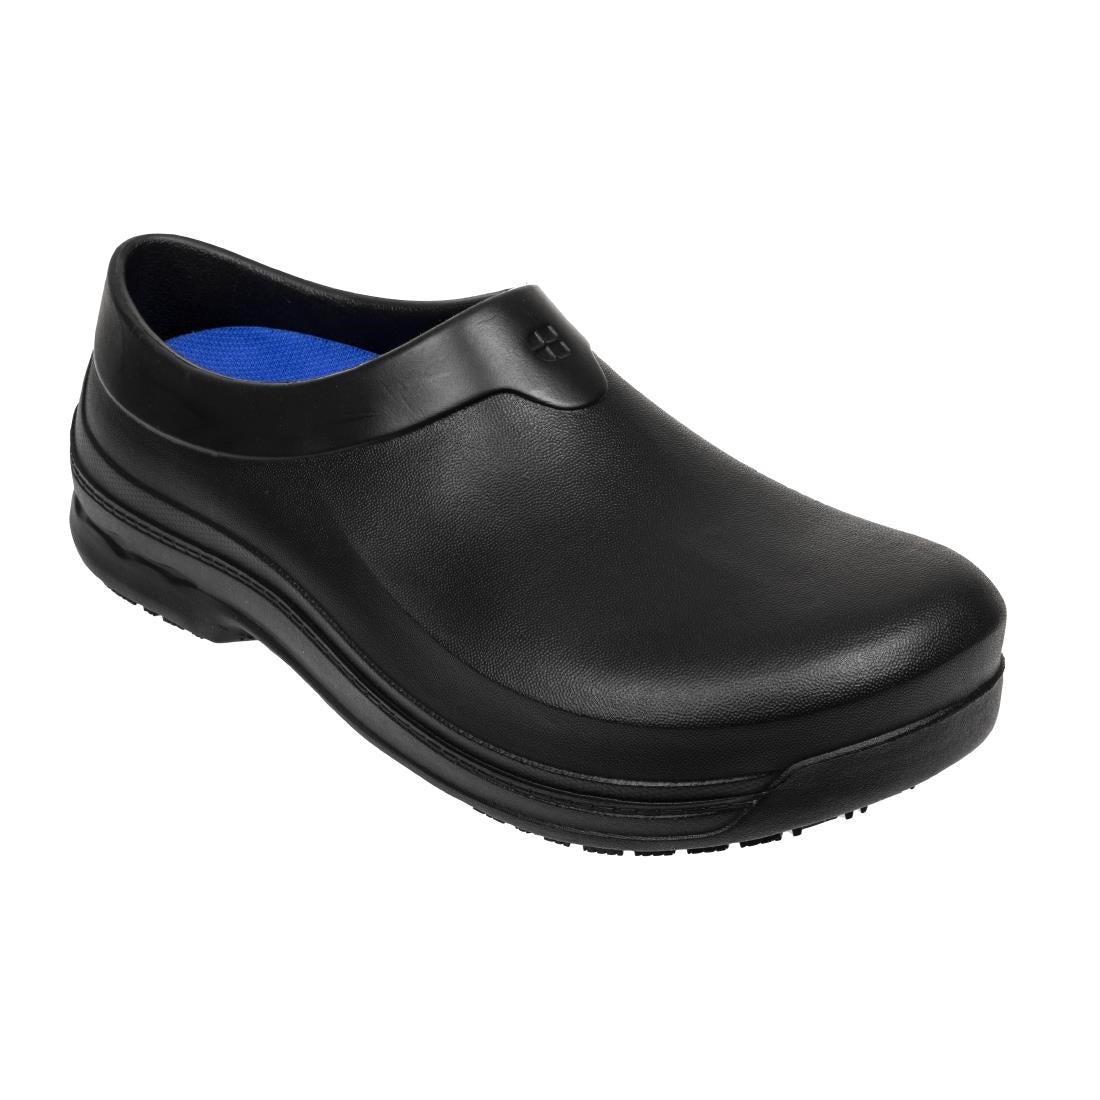 BB581-37 Shoes for Crews Radium Clogs Black